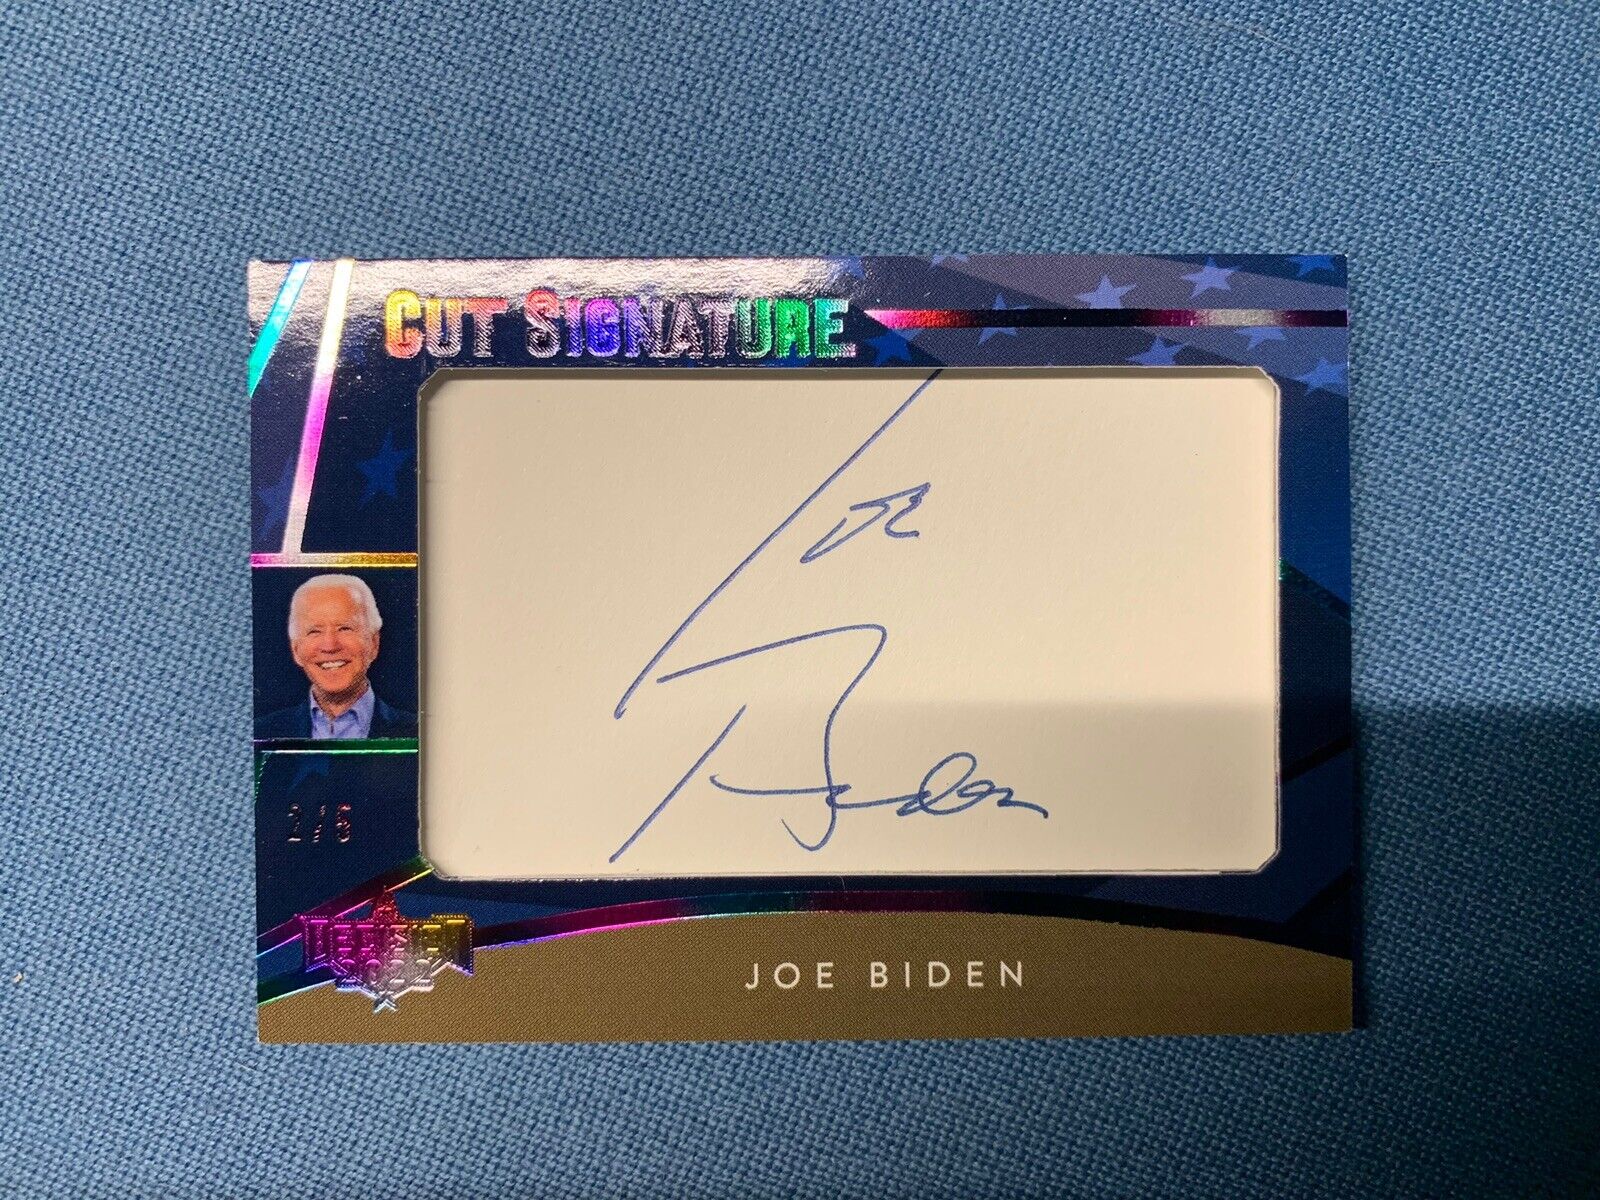 President Joe Biden Cut Signature autograph Decision 2022 /5 Rainbow Foil 2024